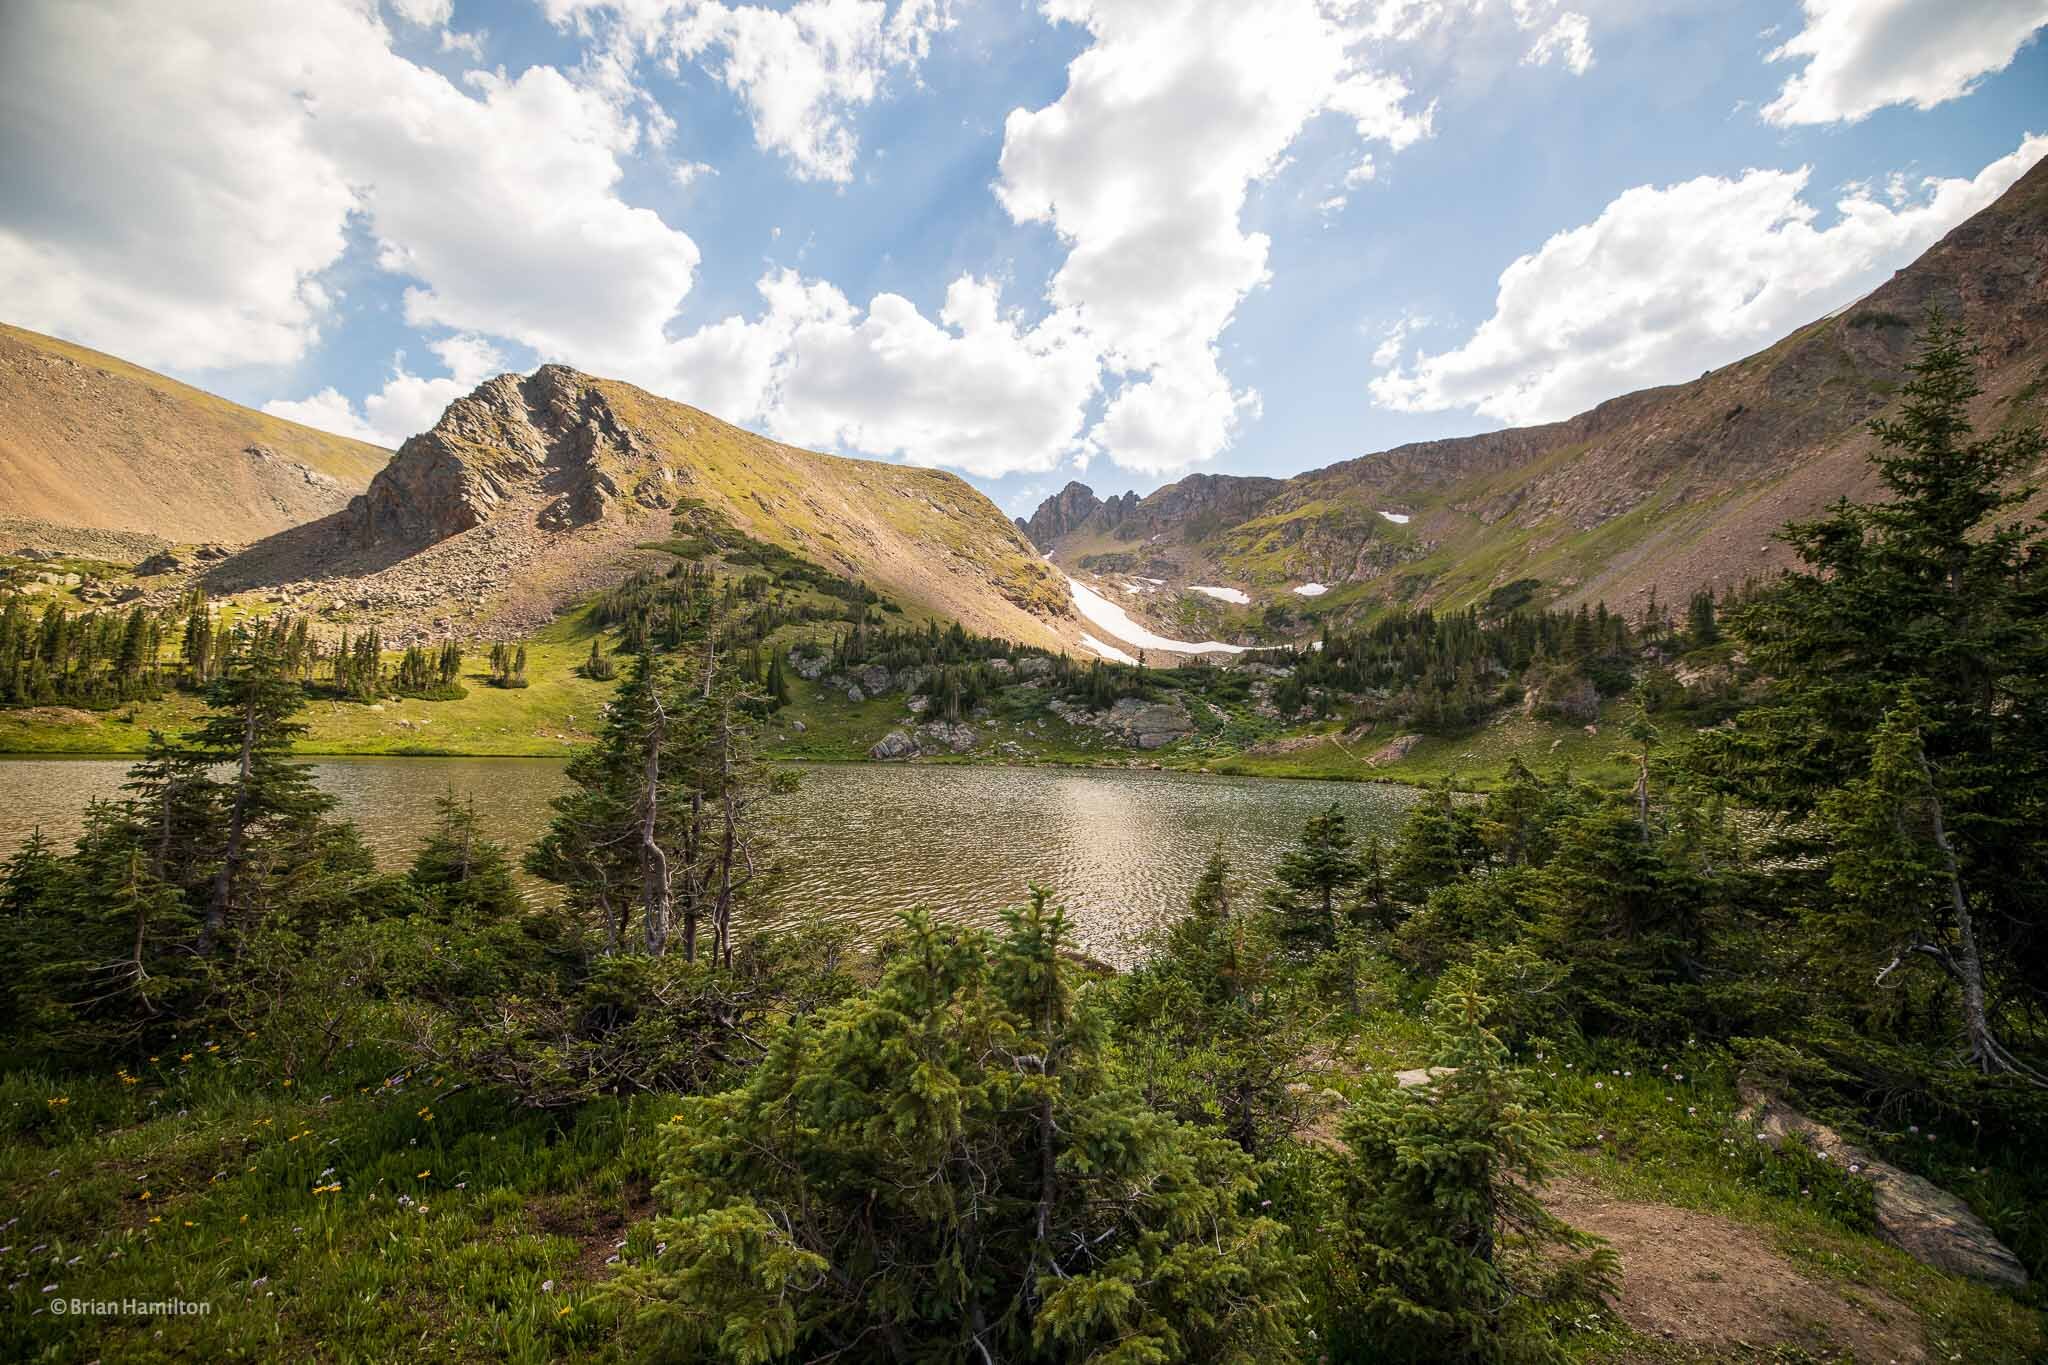 Rogers Pass and Heart Lakes via South Boulder Creek Trail, James Peak Wilderness, Colorado